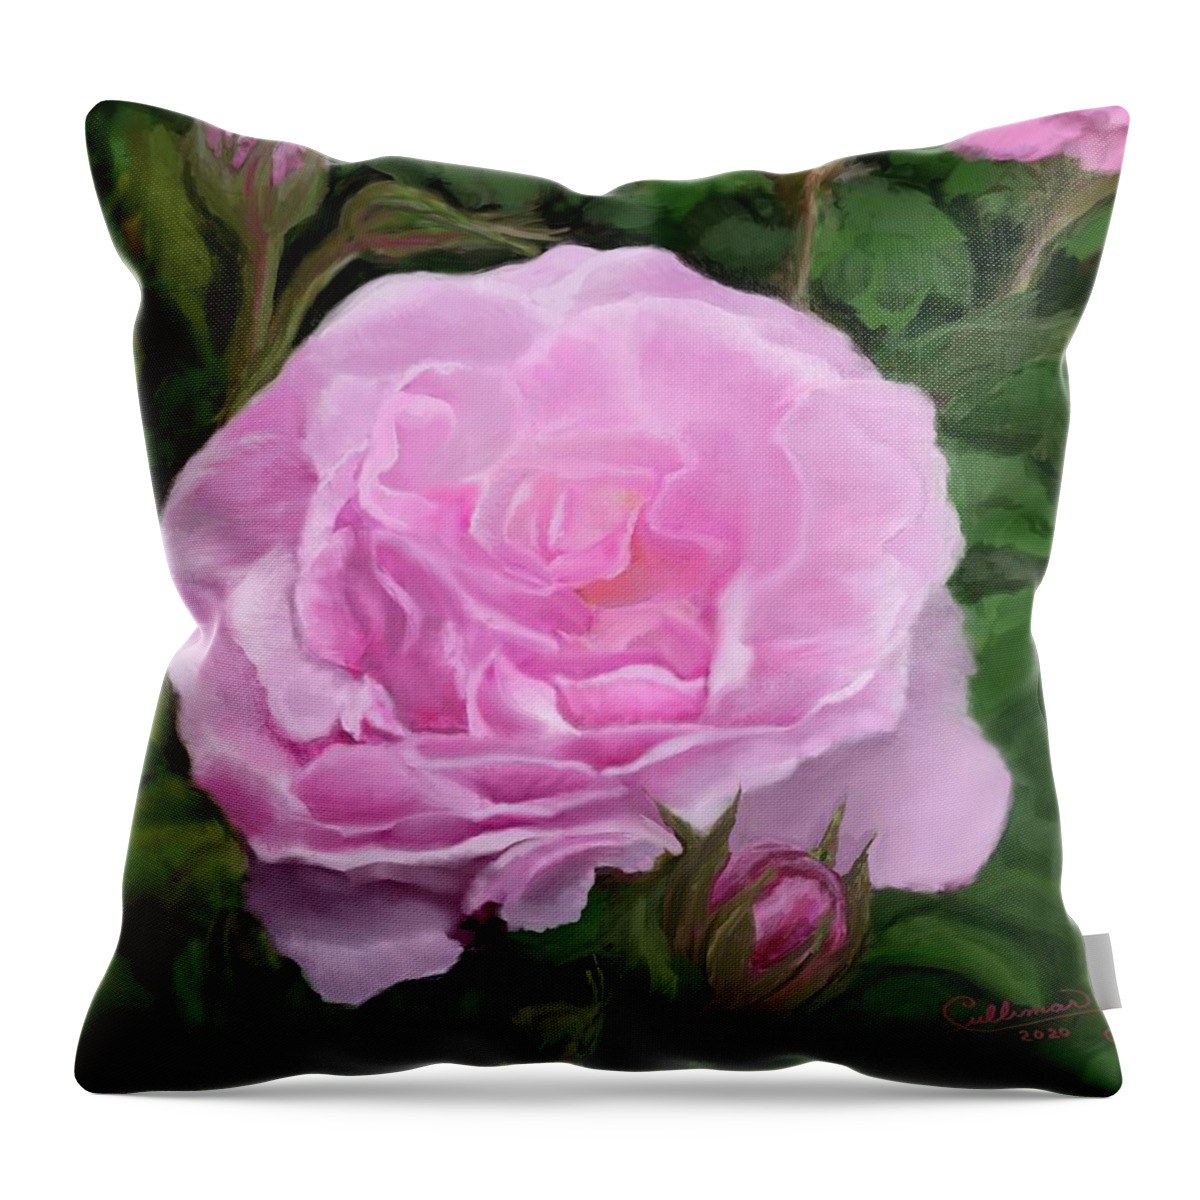 Rose Garden Throw Pillow featuring the digital art Rose Garden by Marilyn Cullingford